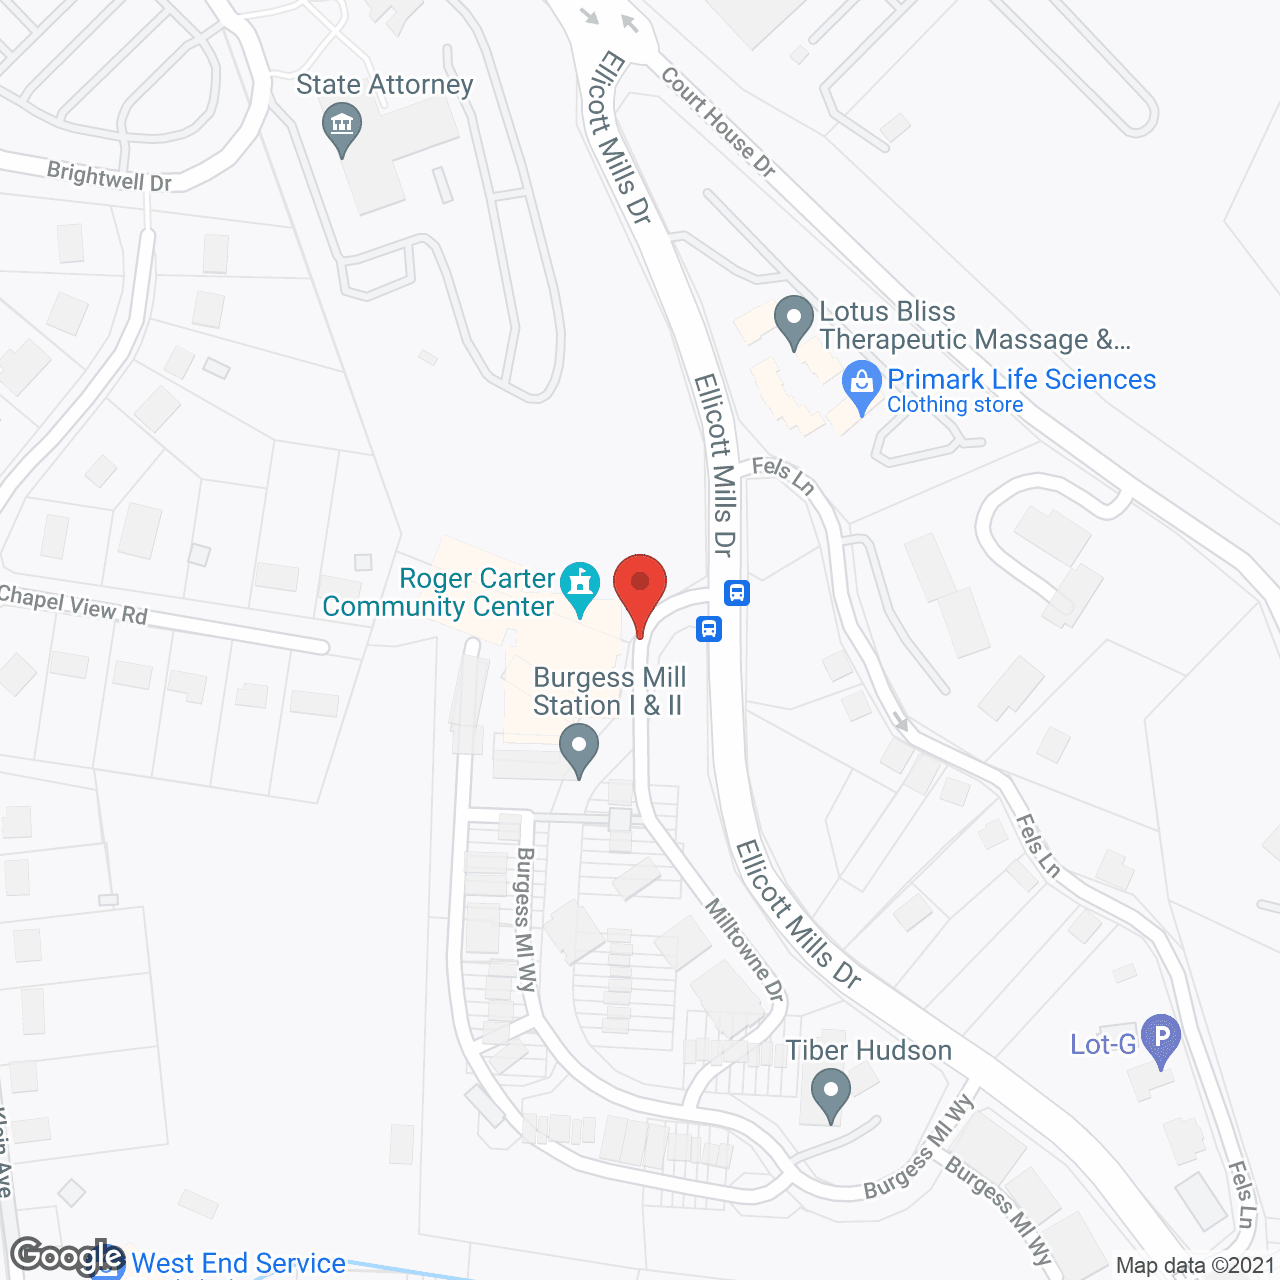 Tiber Hudson in google map